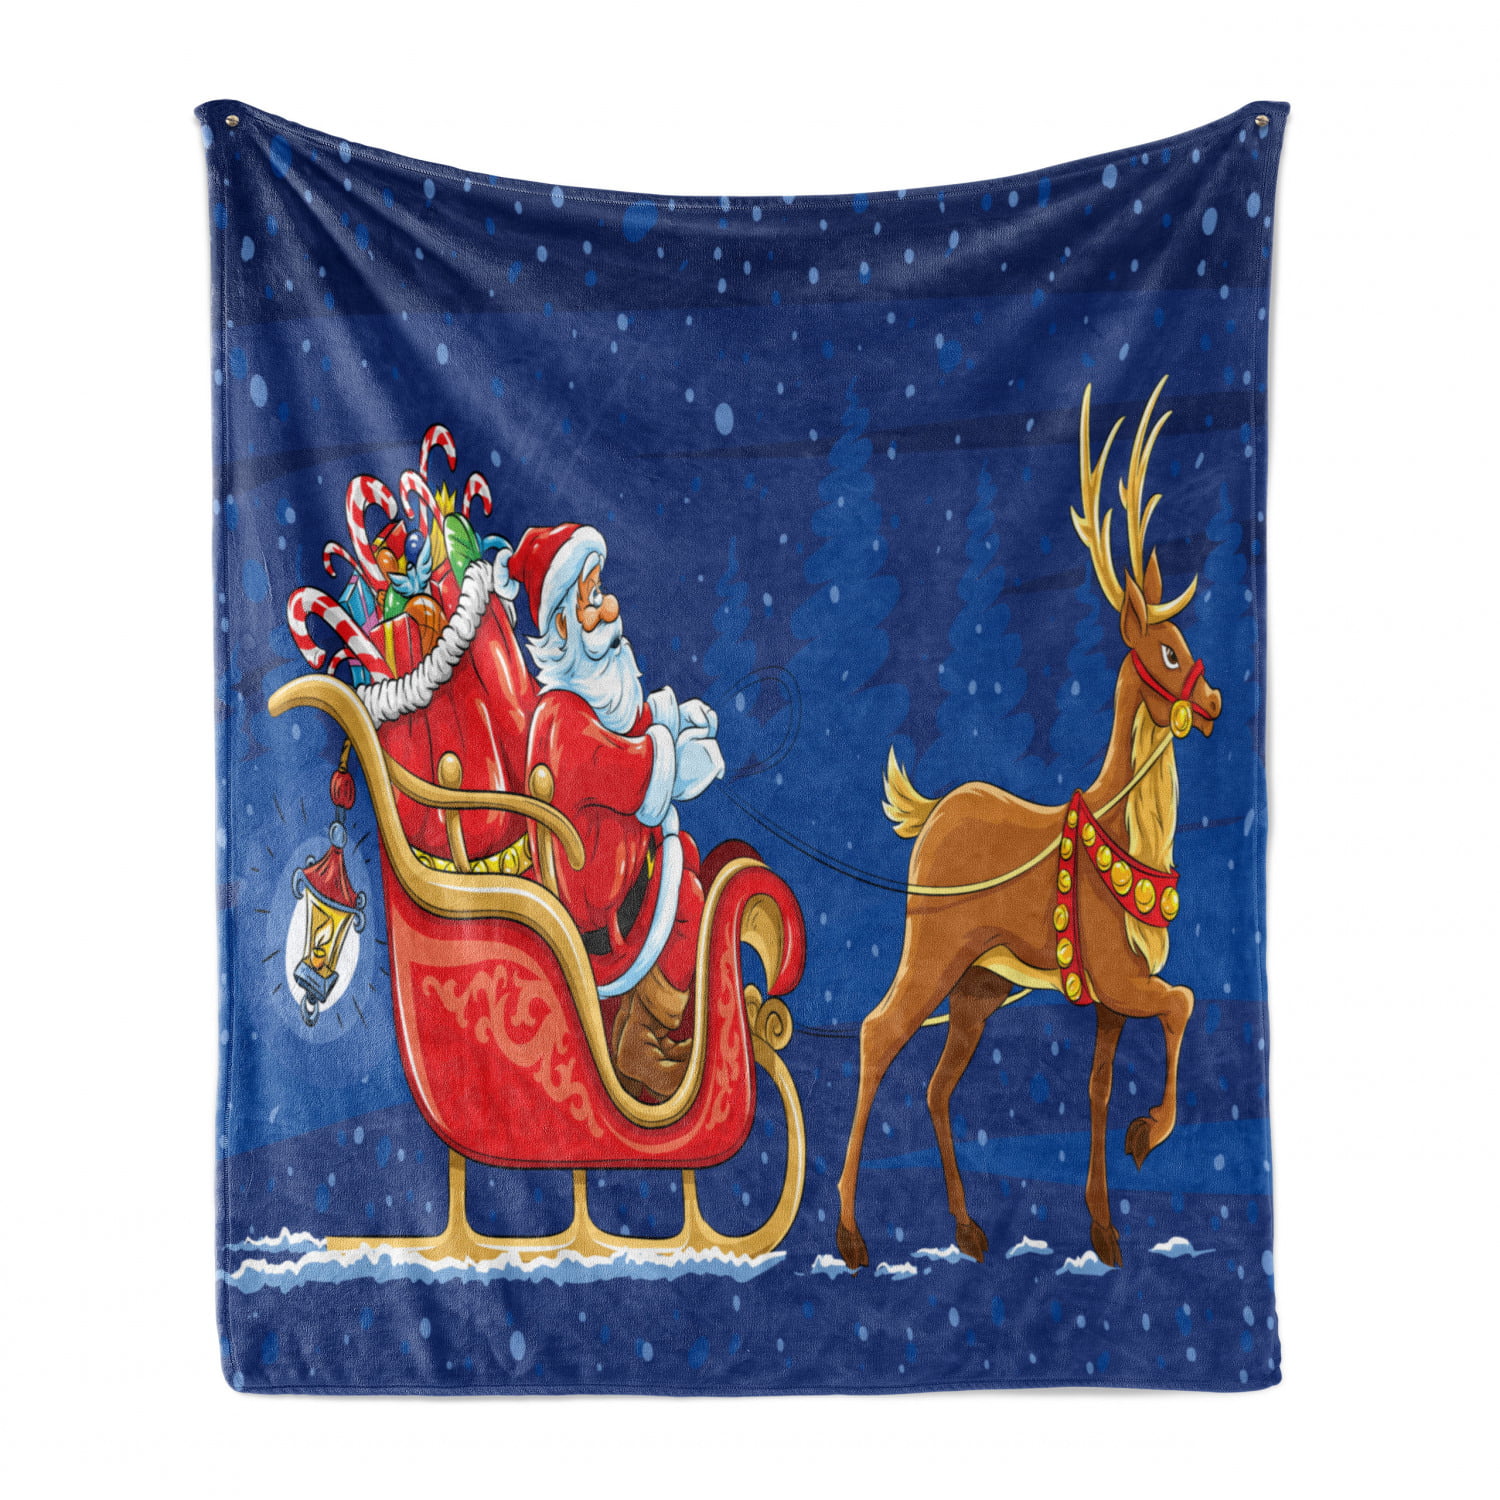 Santa And His Reindeer's Christmas Snow Scene Fleece Blanket Cover Throw Over 